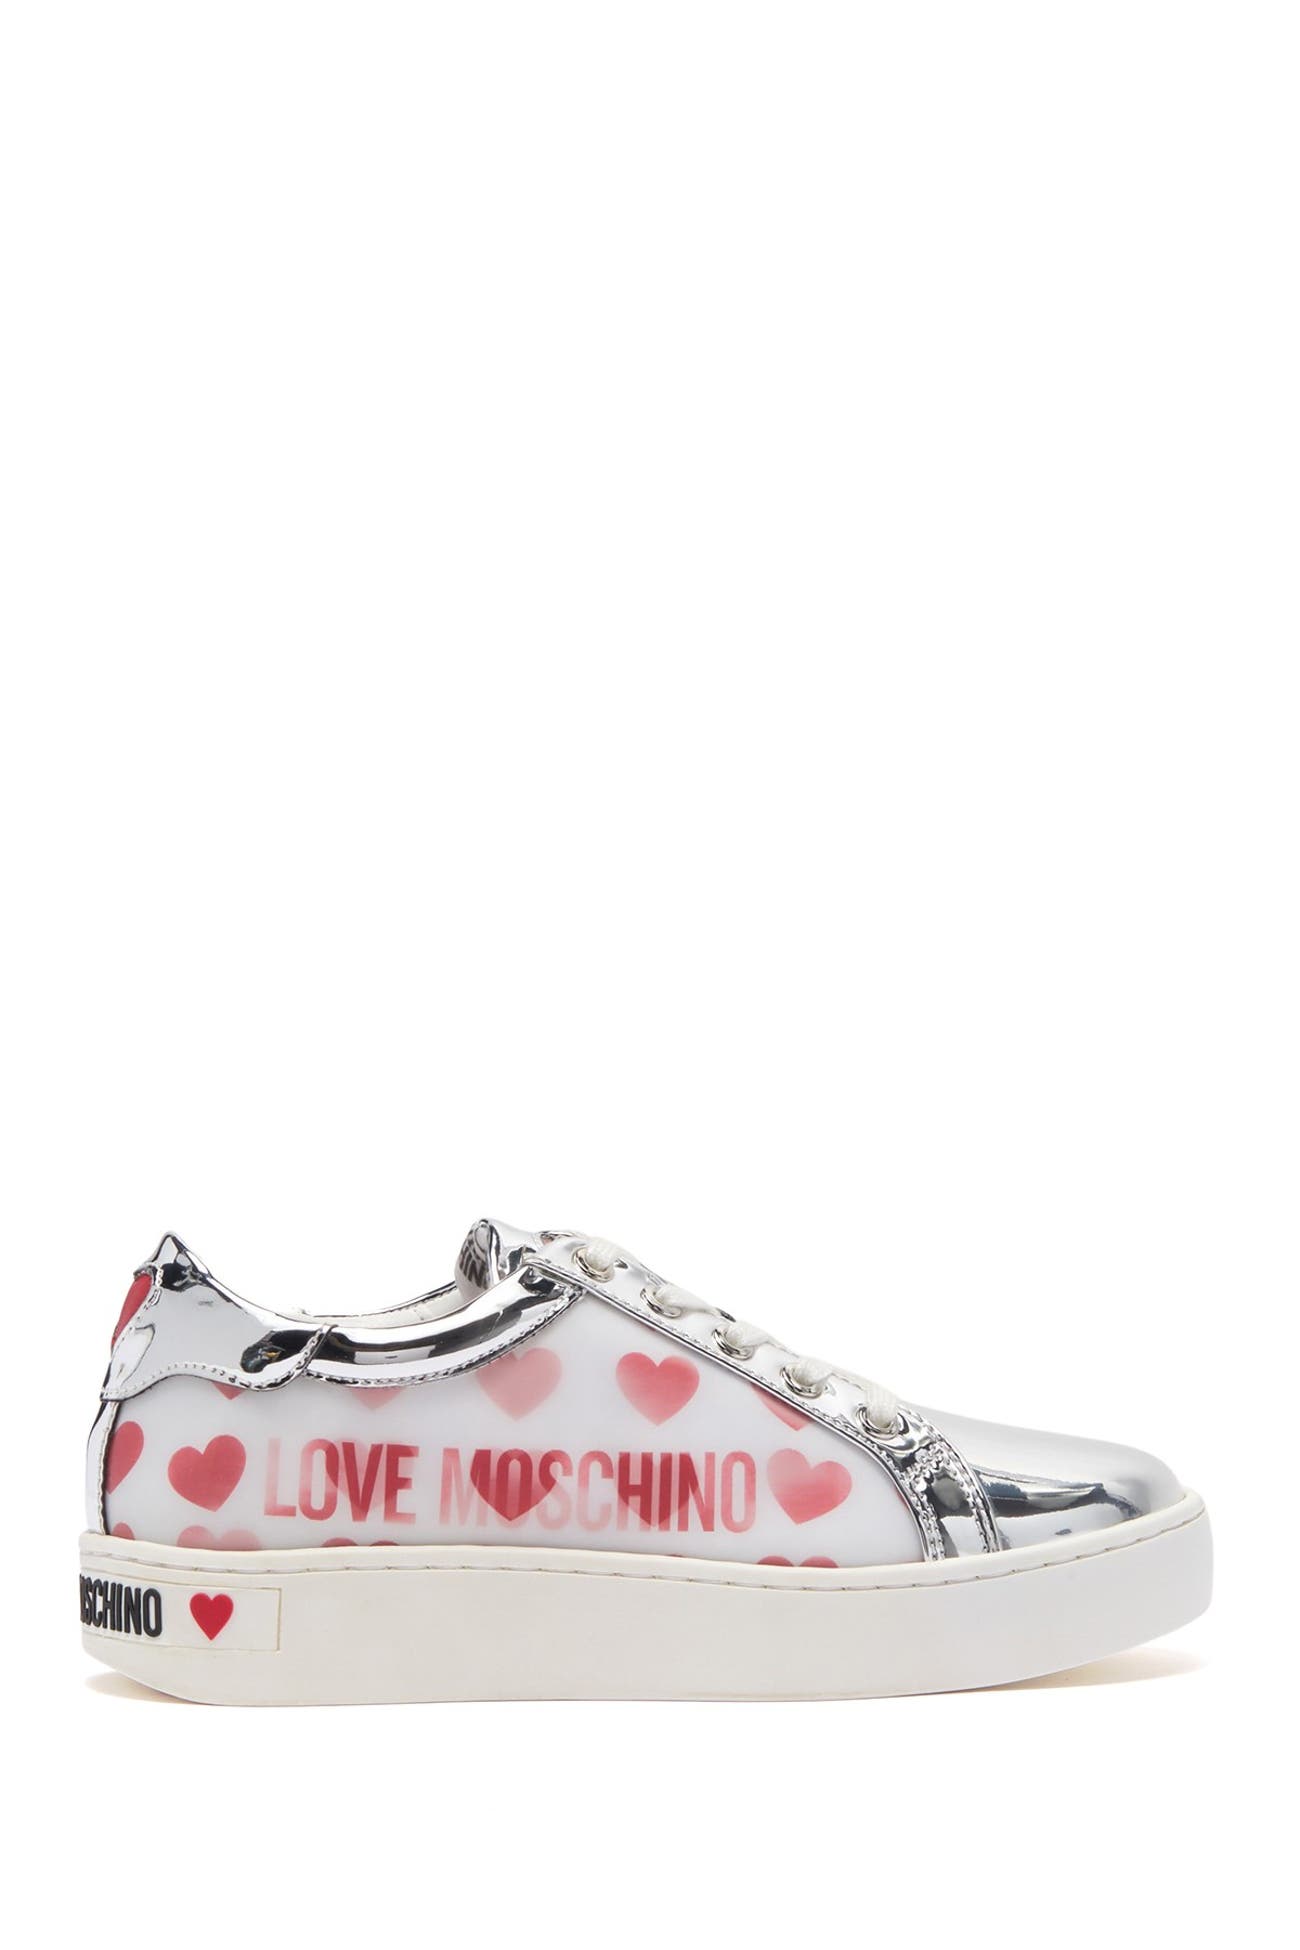 LOVE Moschino | Metallic Heart Leather Sneaker | HauteLook